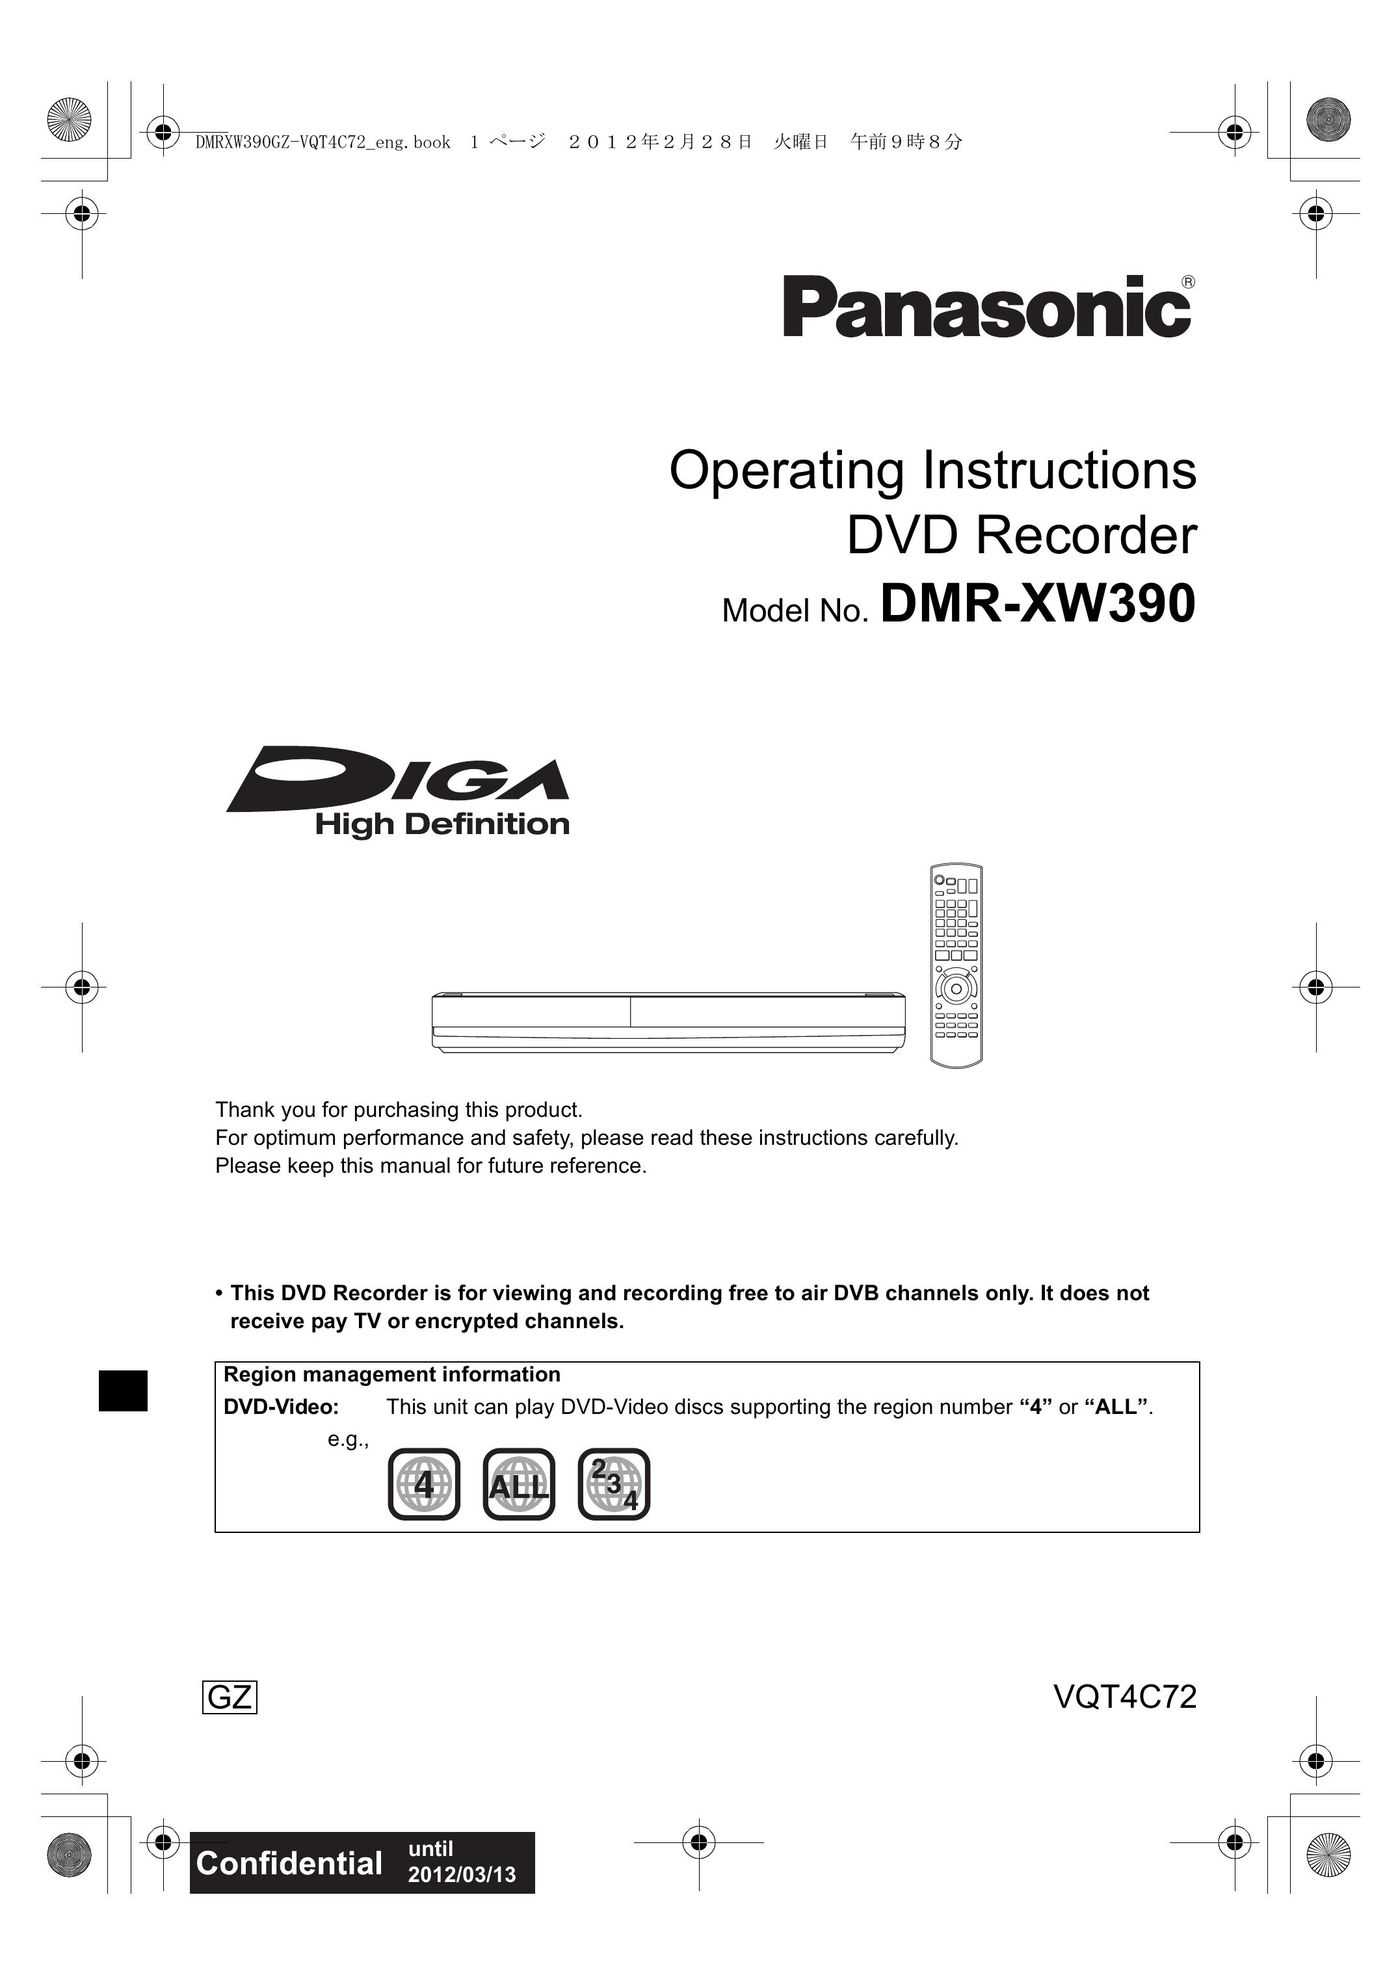 Panasonic DMR-XW390 DVR User Manual